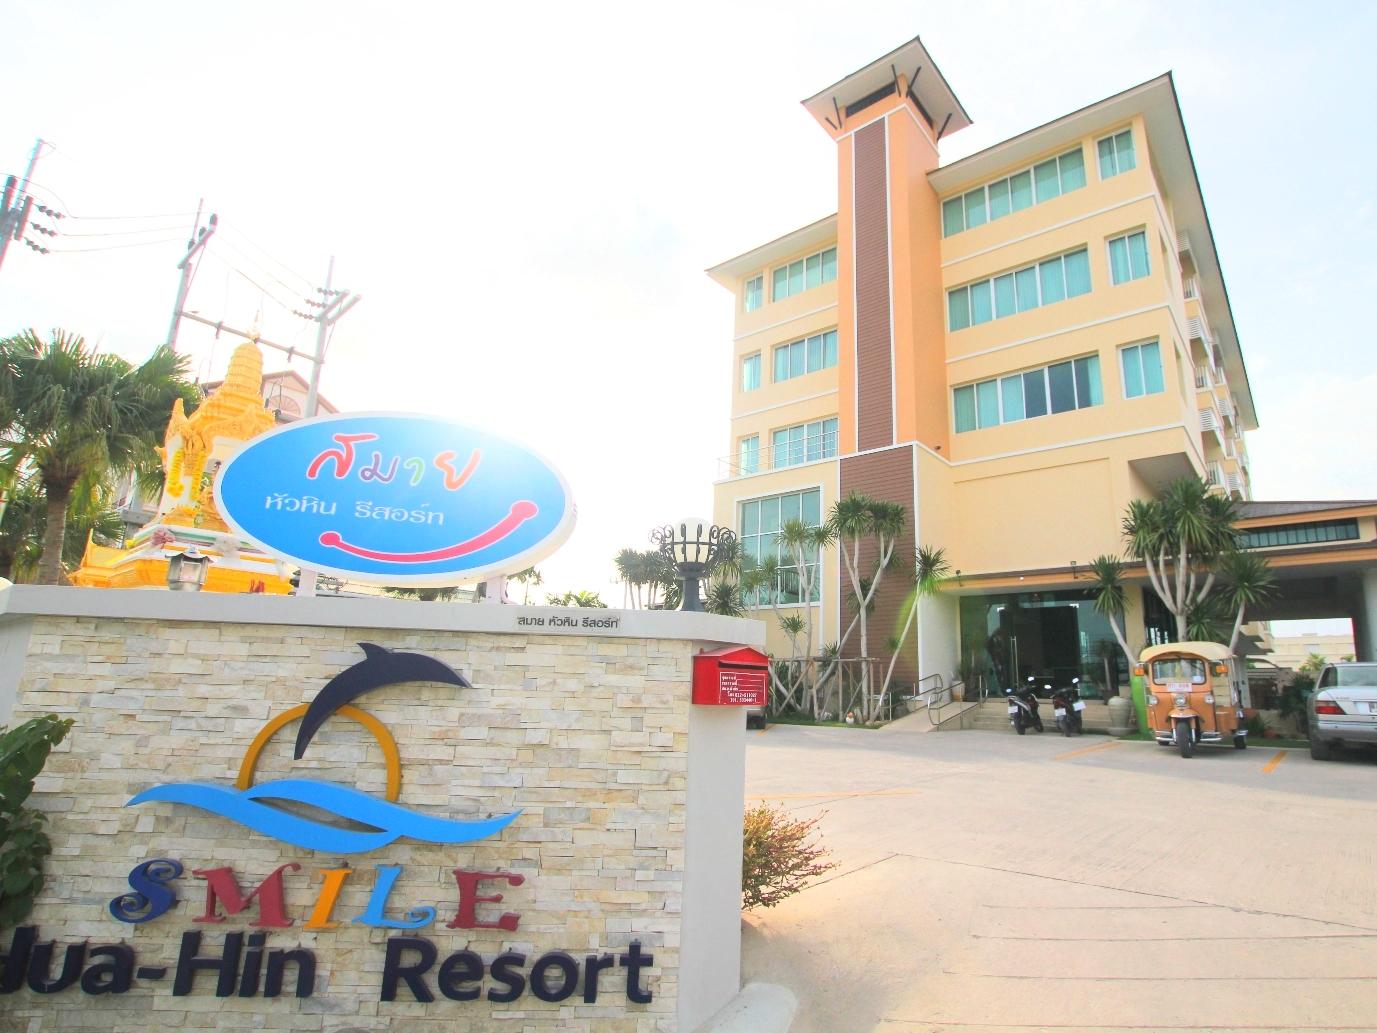 Smile Hua Hin Resort - Image 0